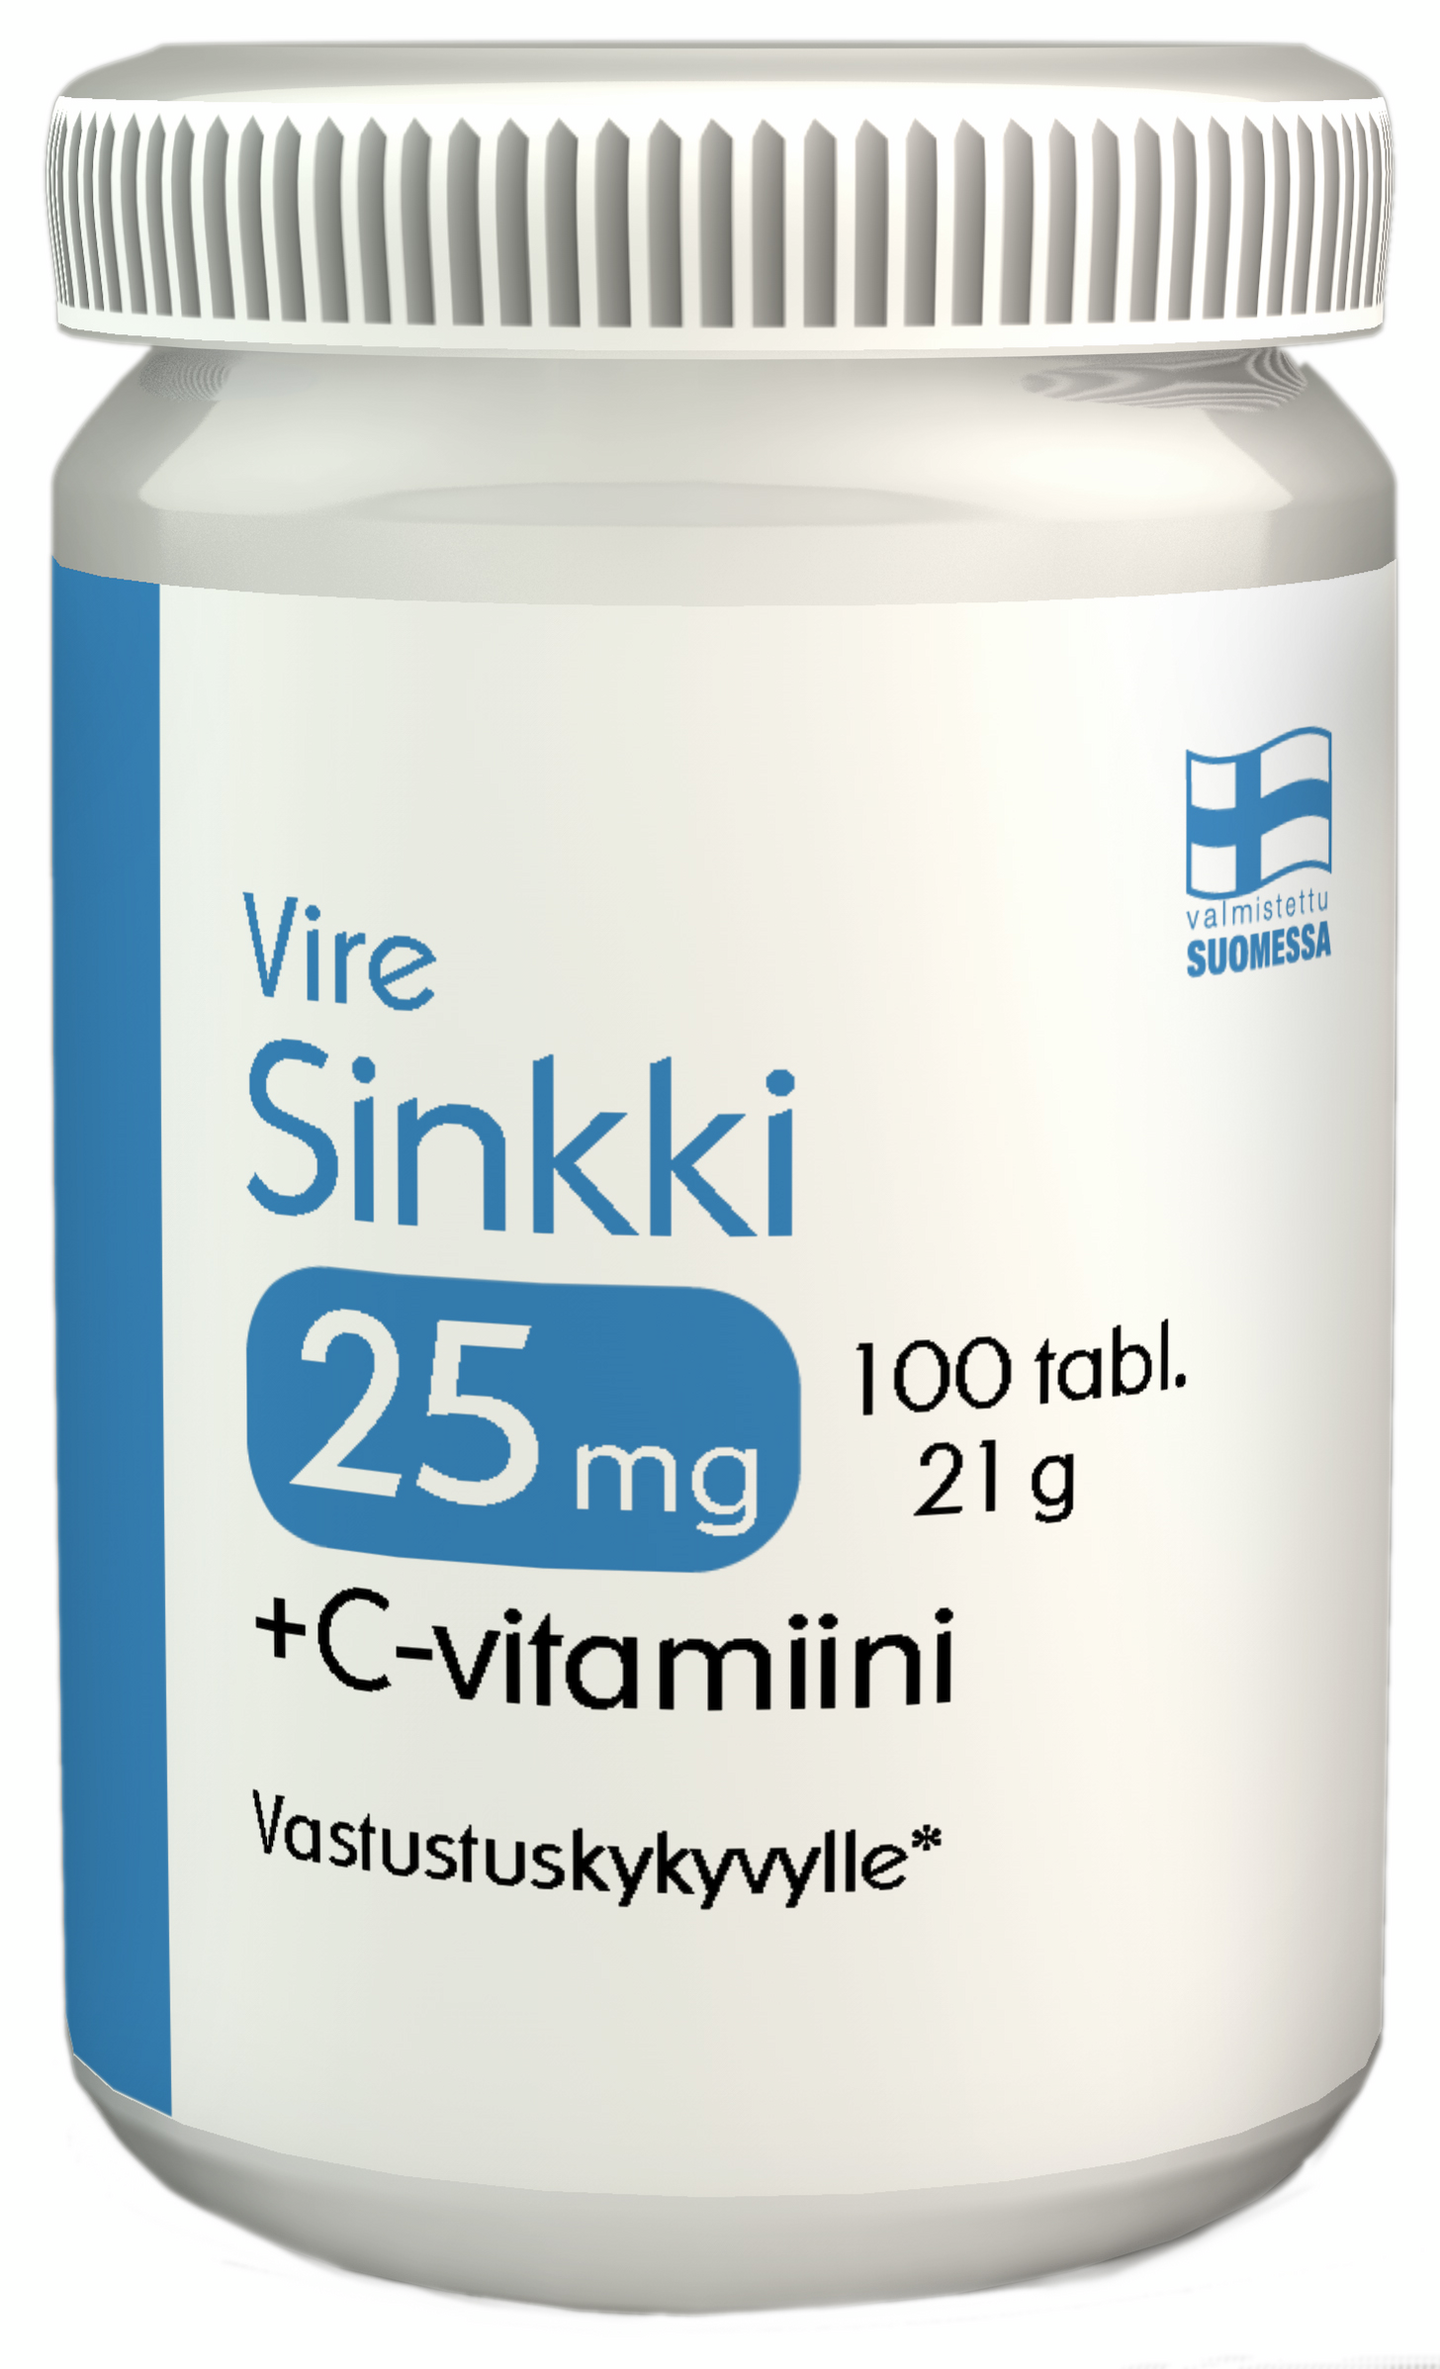 Vire Sinkki + C-vitamiinivalmiste Sinkki 25 mg + C-vitamiini 100tabl 21g